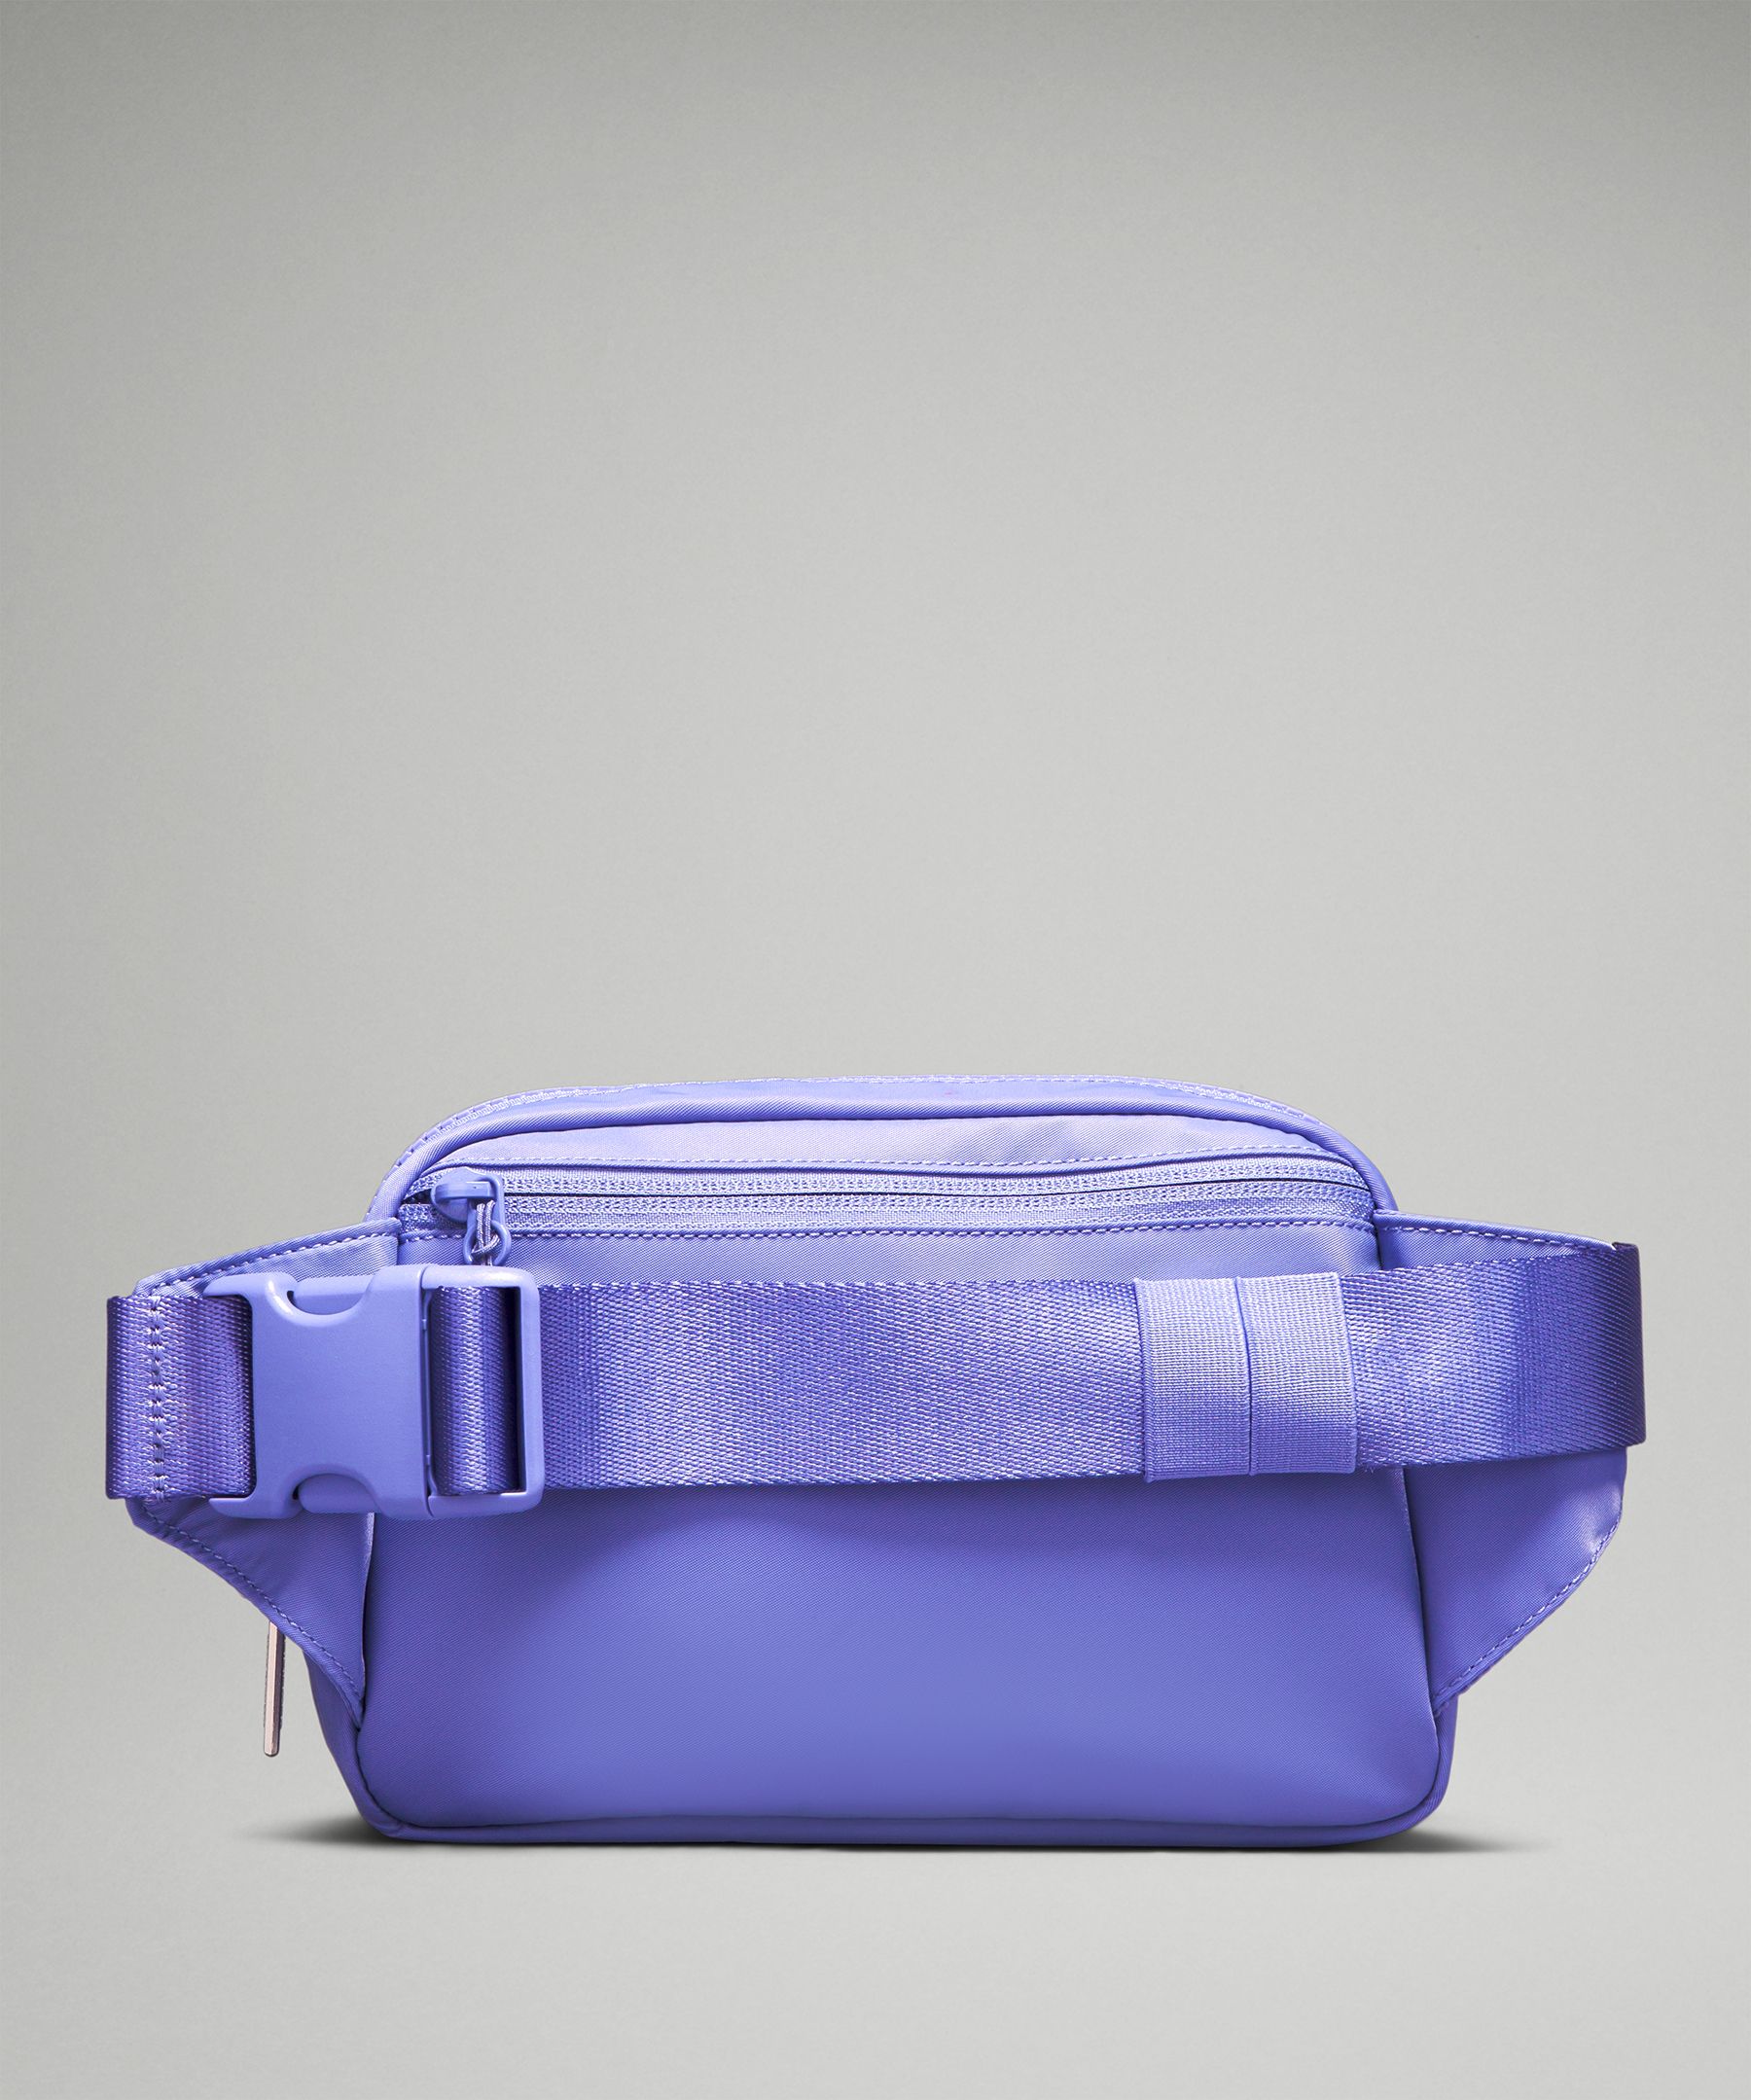 Track Mini Belt Bag - Atomic Purple/Blue Linen - ONE SIZE at Lululemon